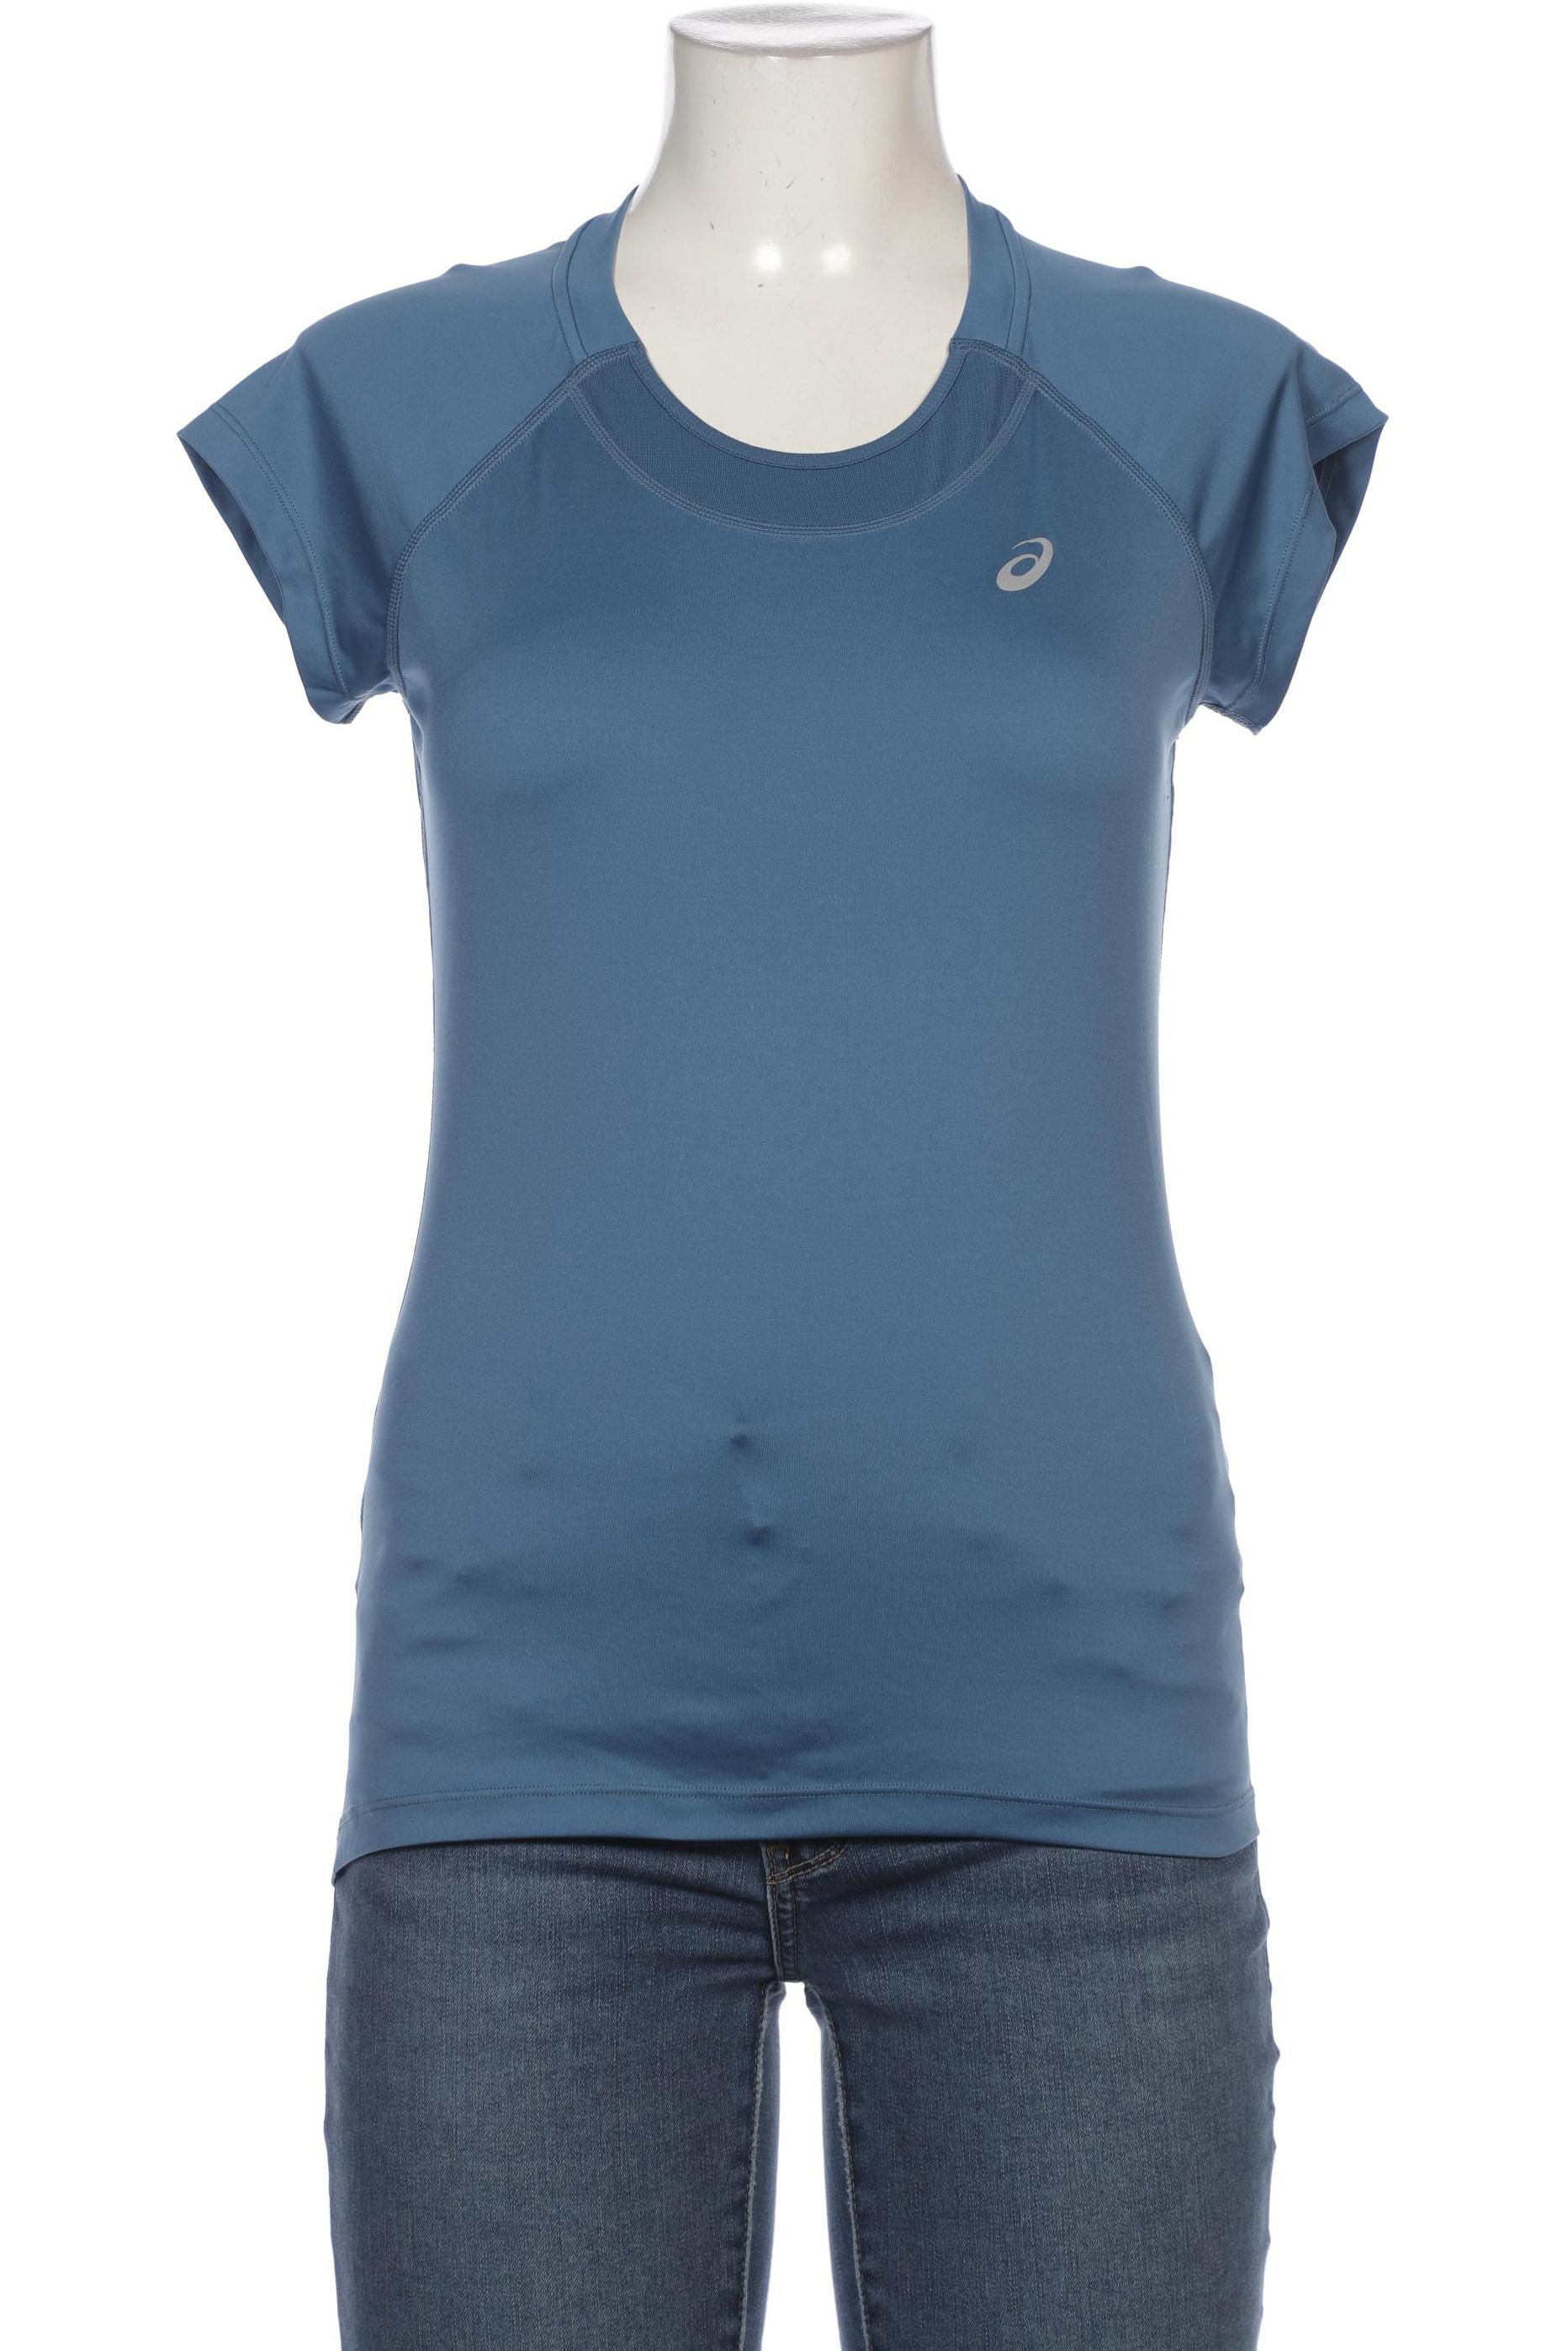 Asics Damen T-Shirt, blau von ASICS